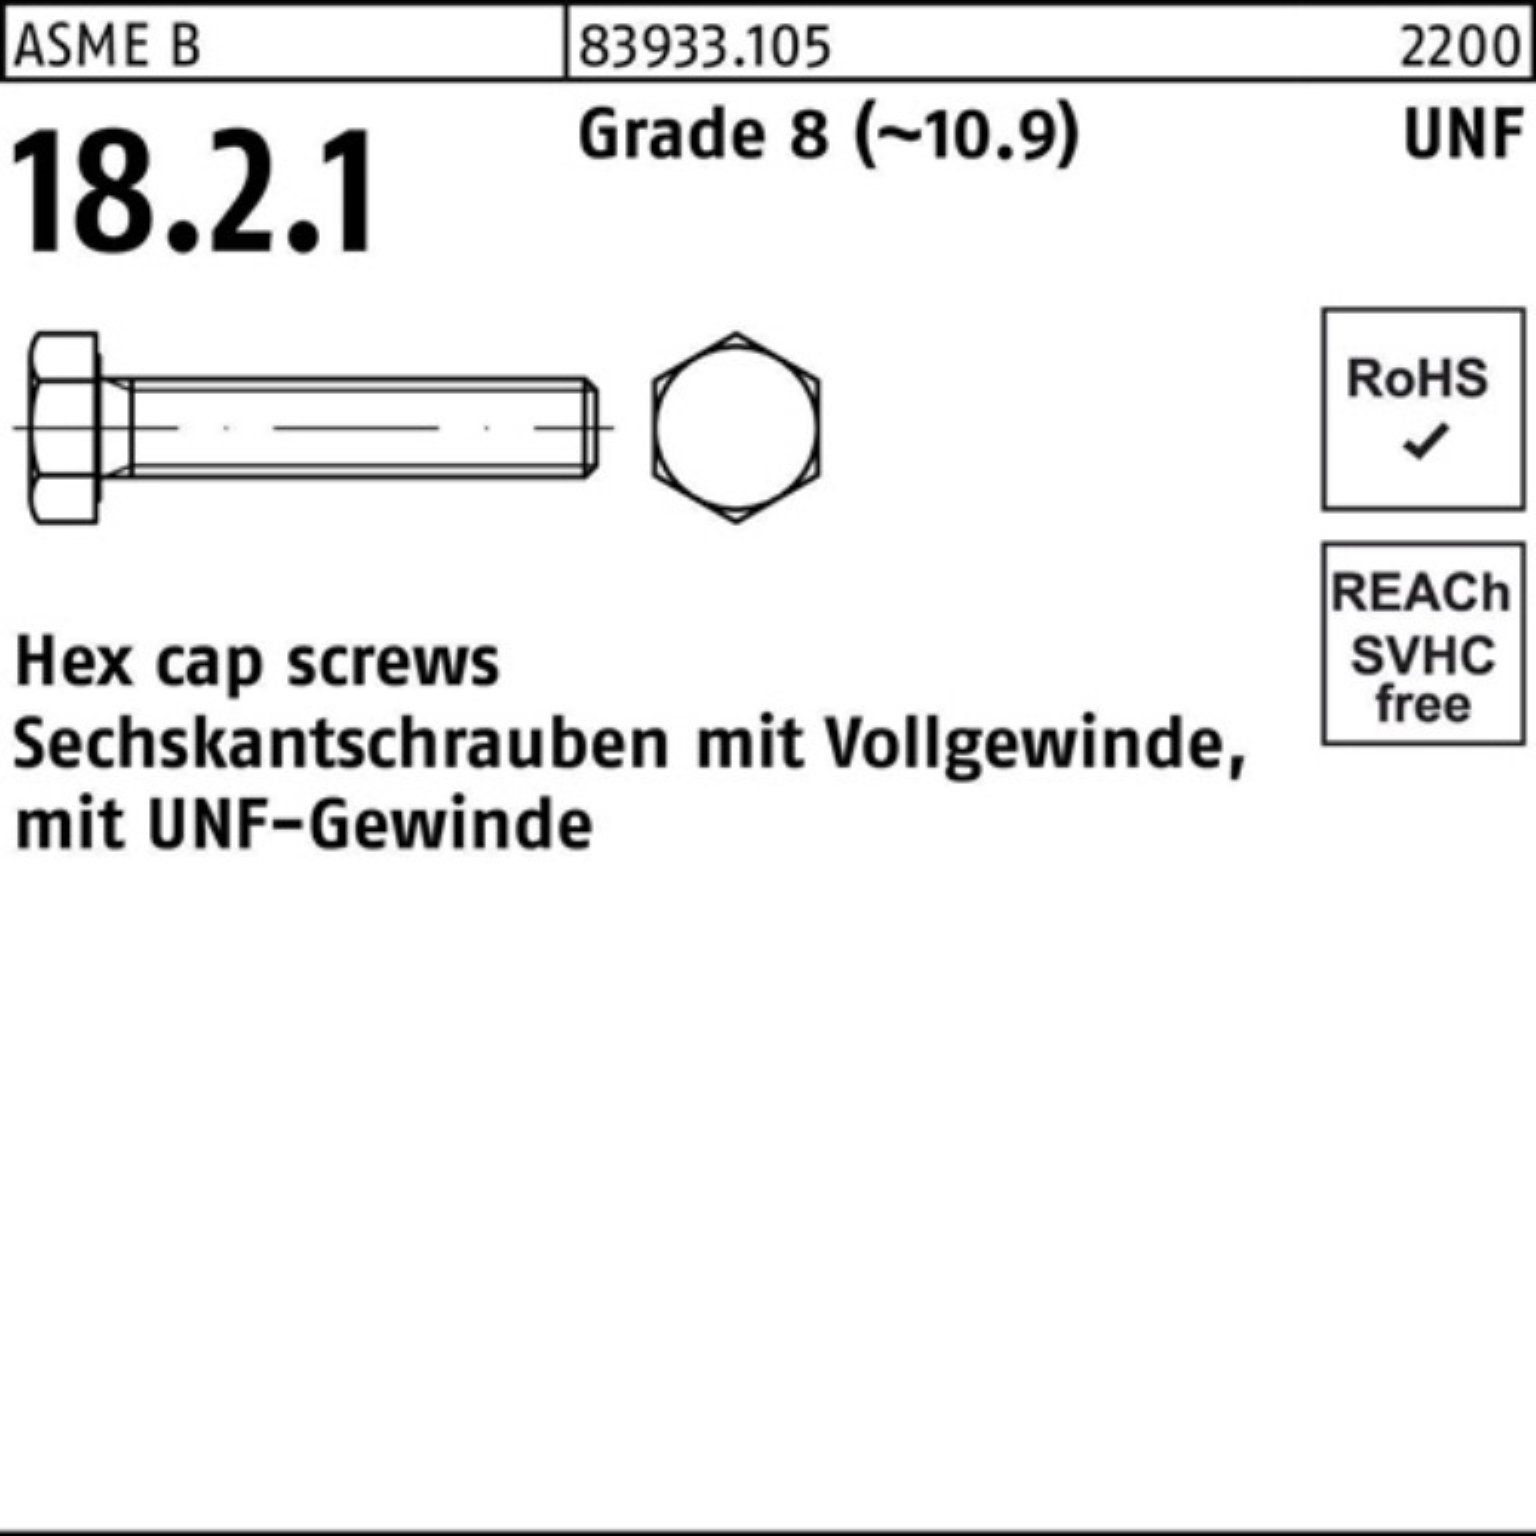 Reyher Sechskantschraube UNF-Gewinde VG R 1 83933 8 Grade Pack 100er 1/2 Sechskantschraube 3/4x